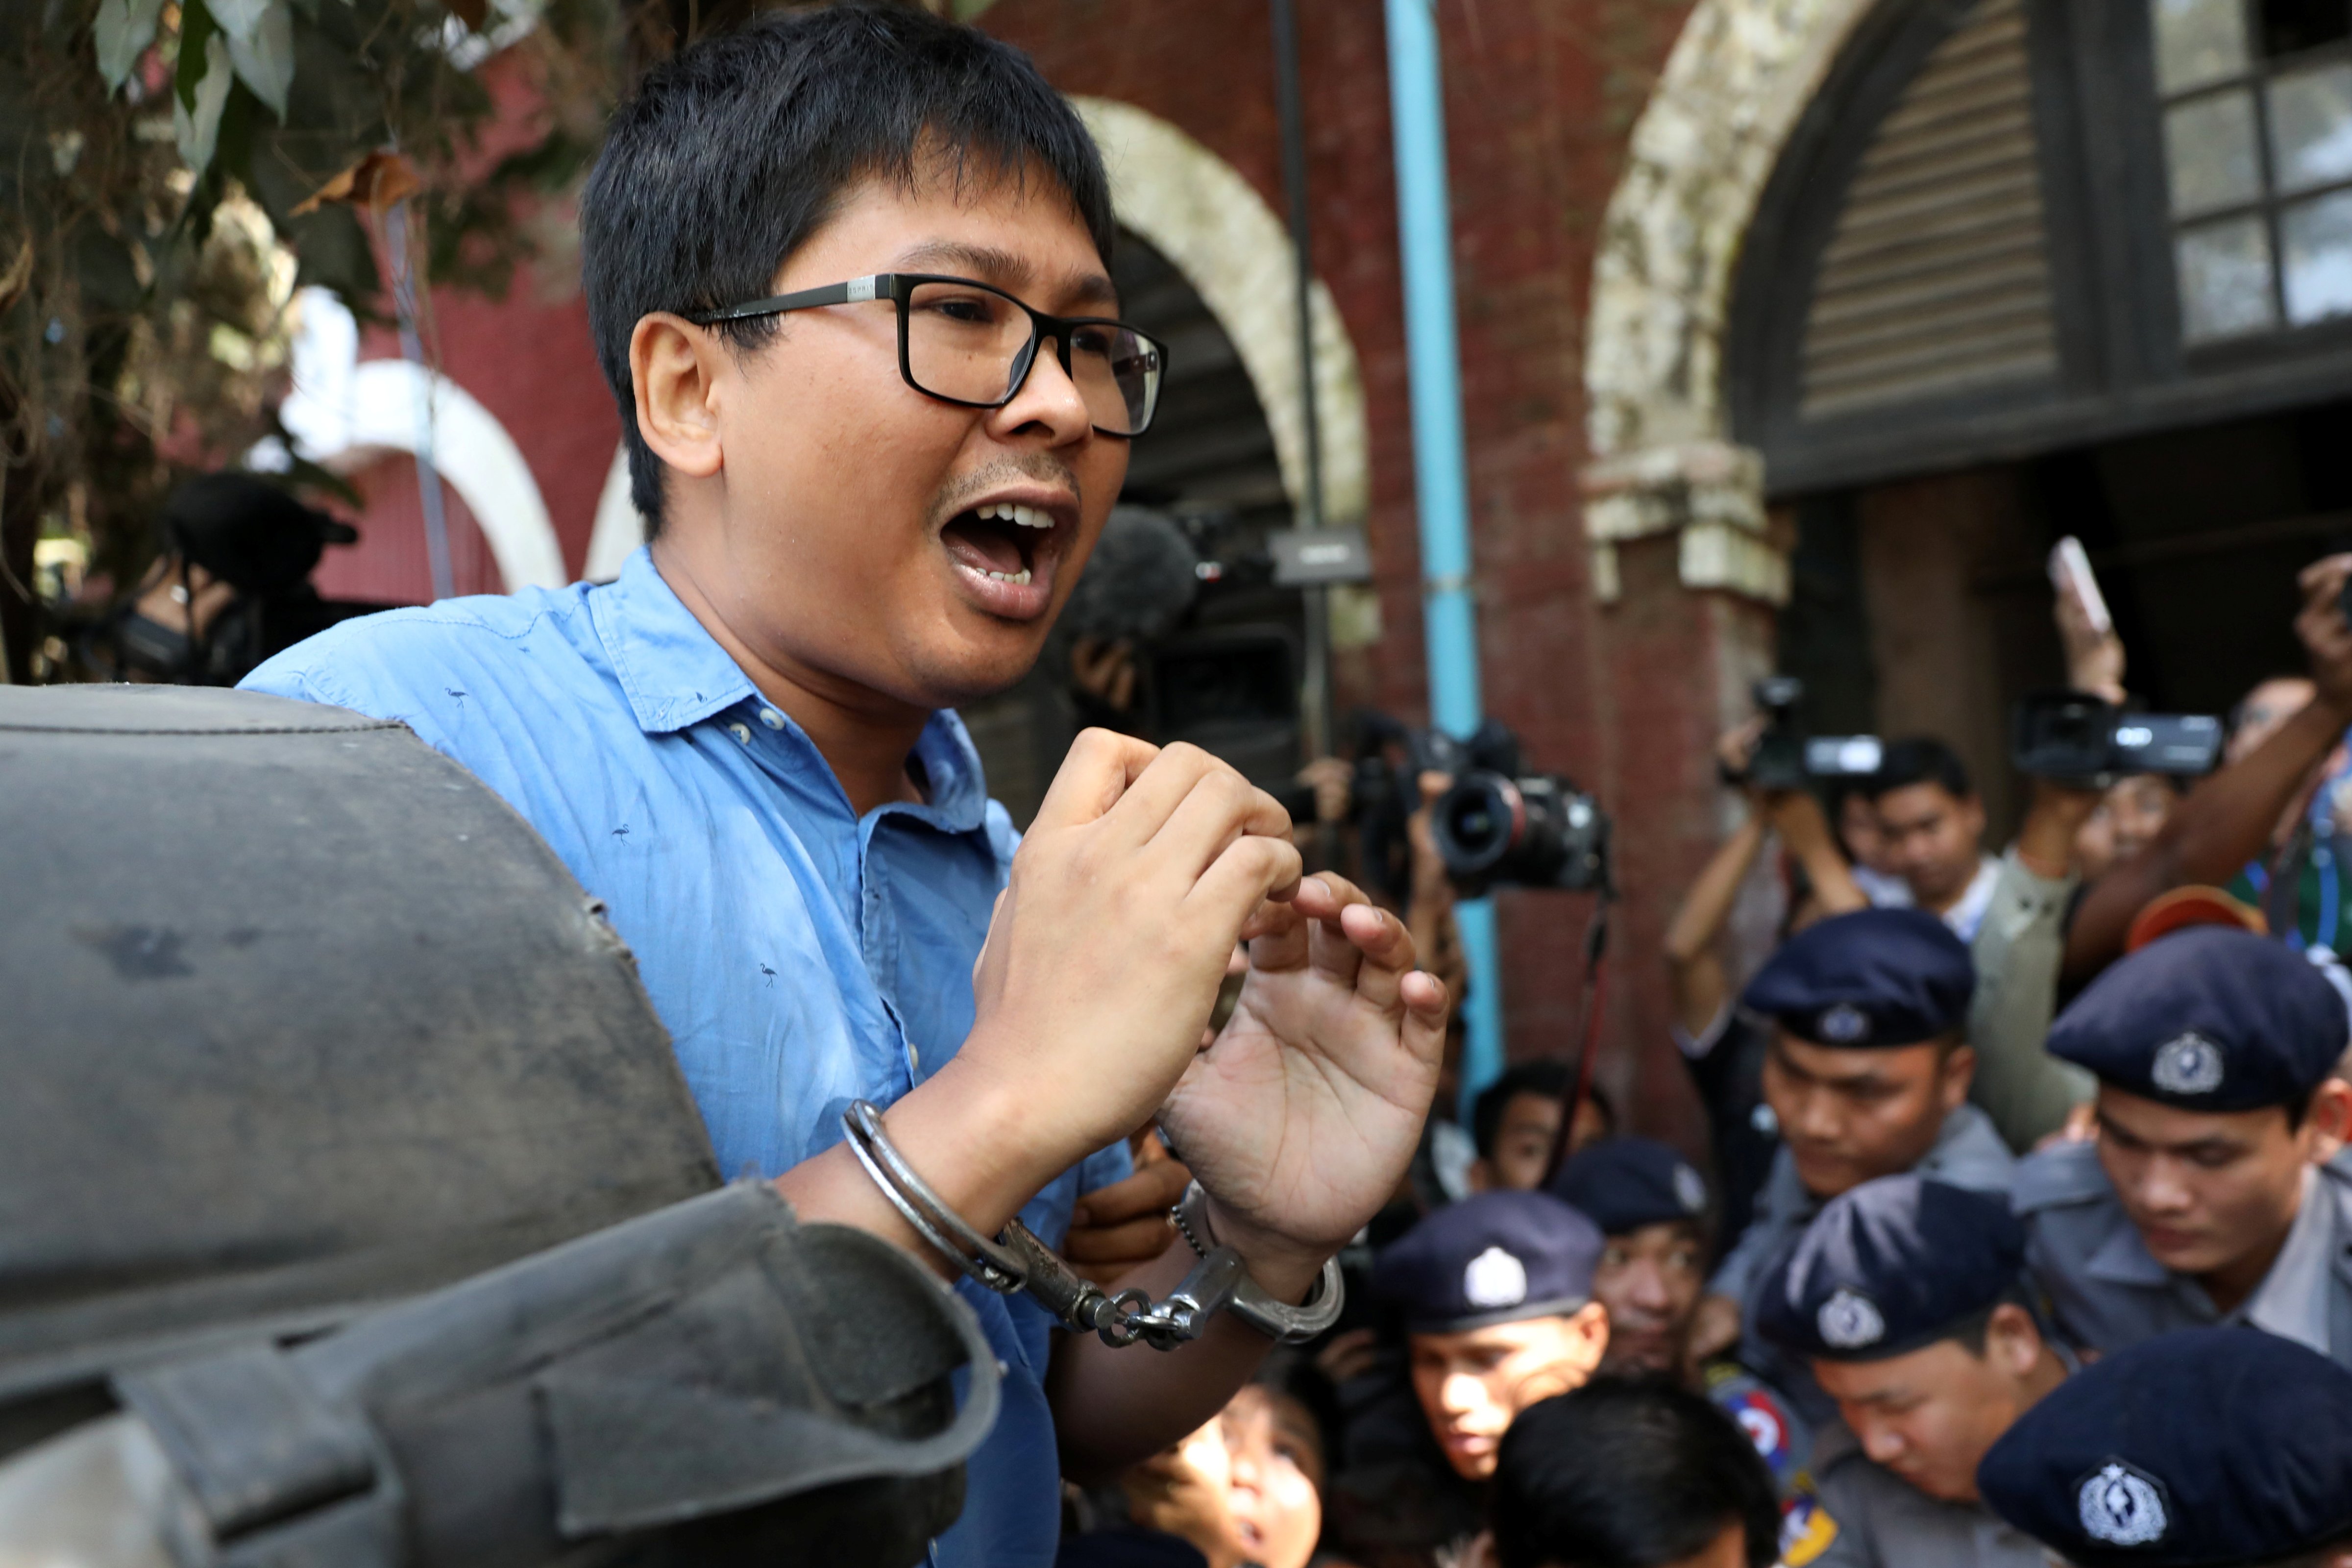 Reuters journalist Wa Lone arrives at the court in Yangon, Myanmar Jan. 10, 2018. (Stringer/Reuters)